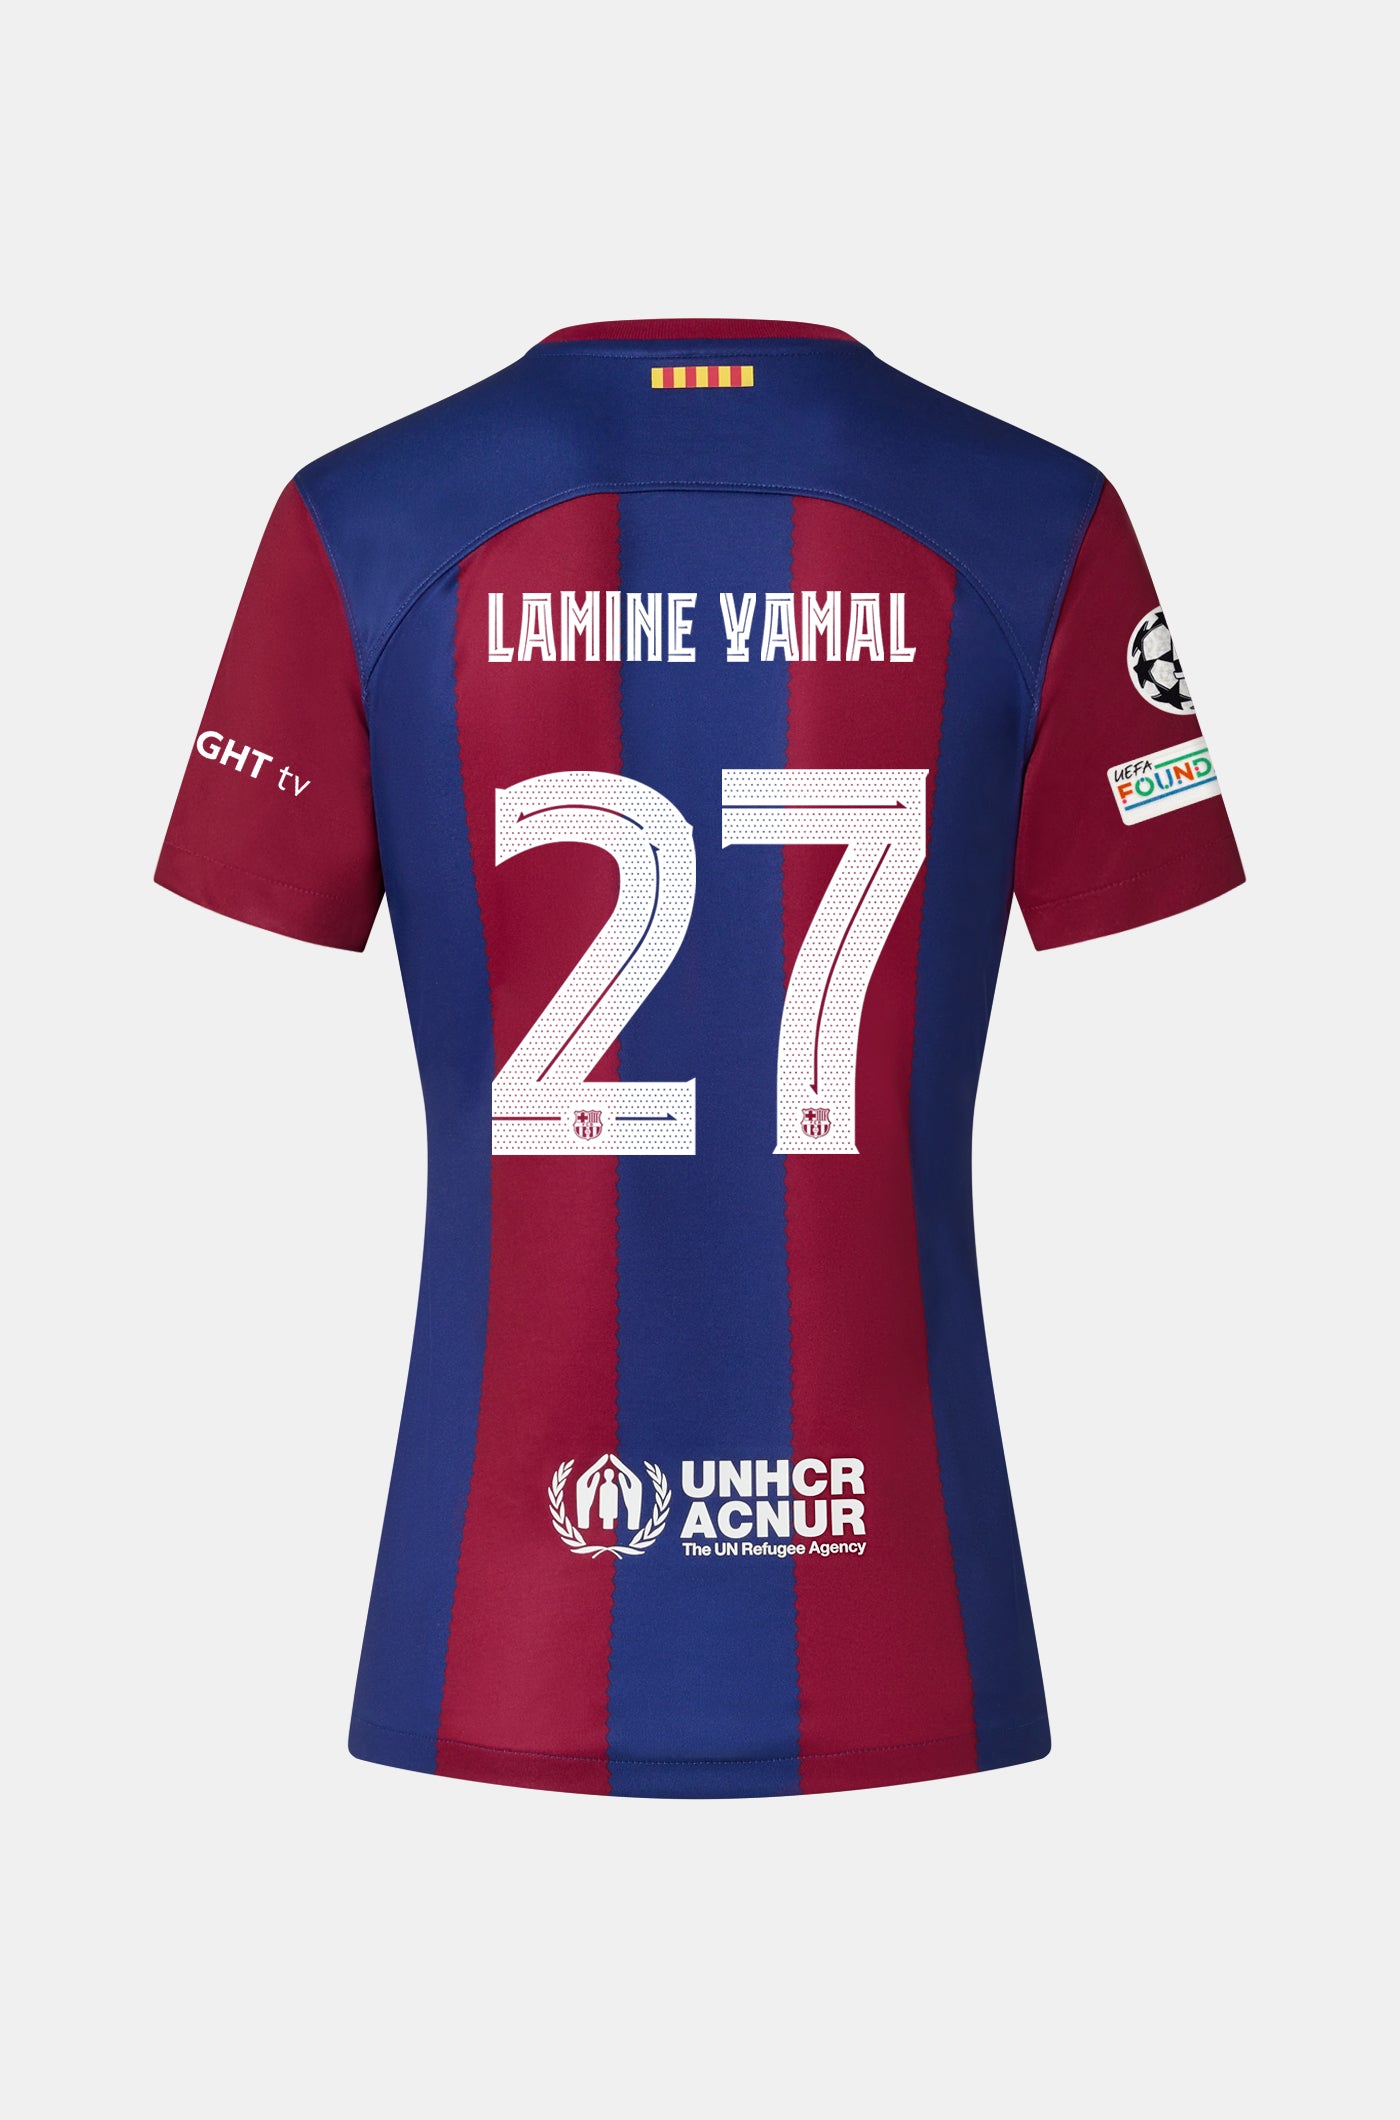 UCL FC Barcelona Home Shirt 23/24 Player's Edition - Women - LAMINE YAMAL